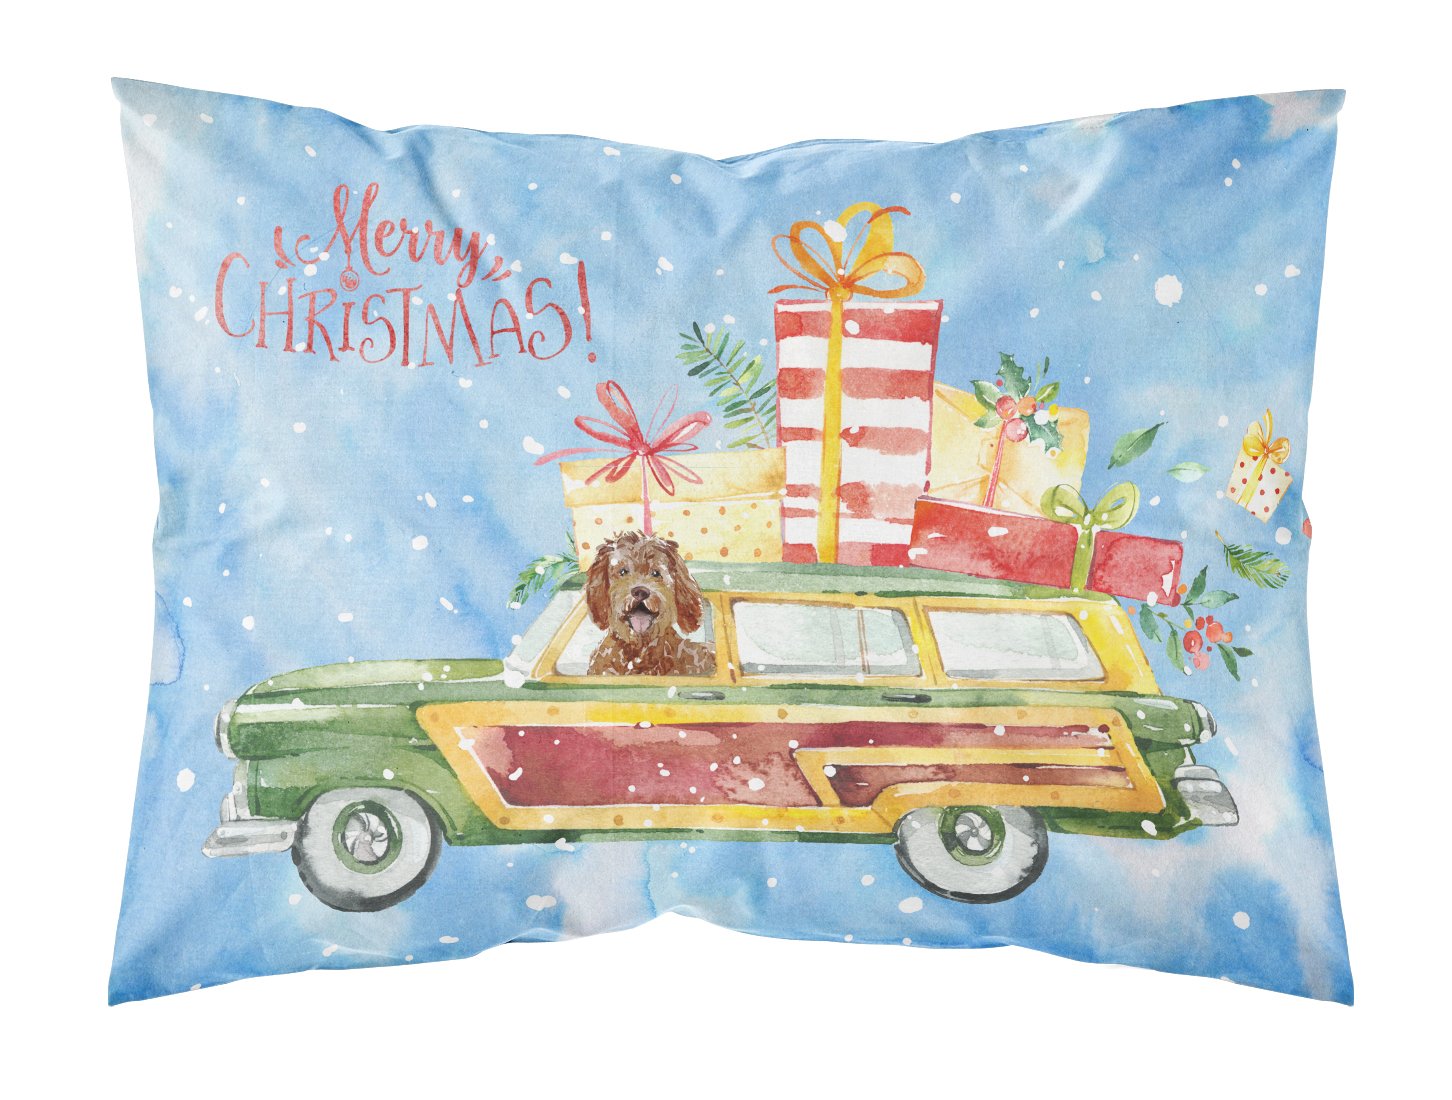 Merry Christmas Labradoodle Fabric Standard Pillowcase CK2411PILLOWCASE by Caroline's Treasures